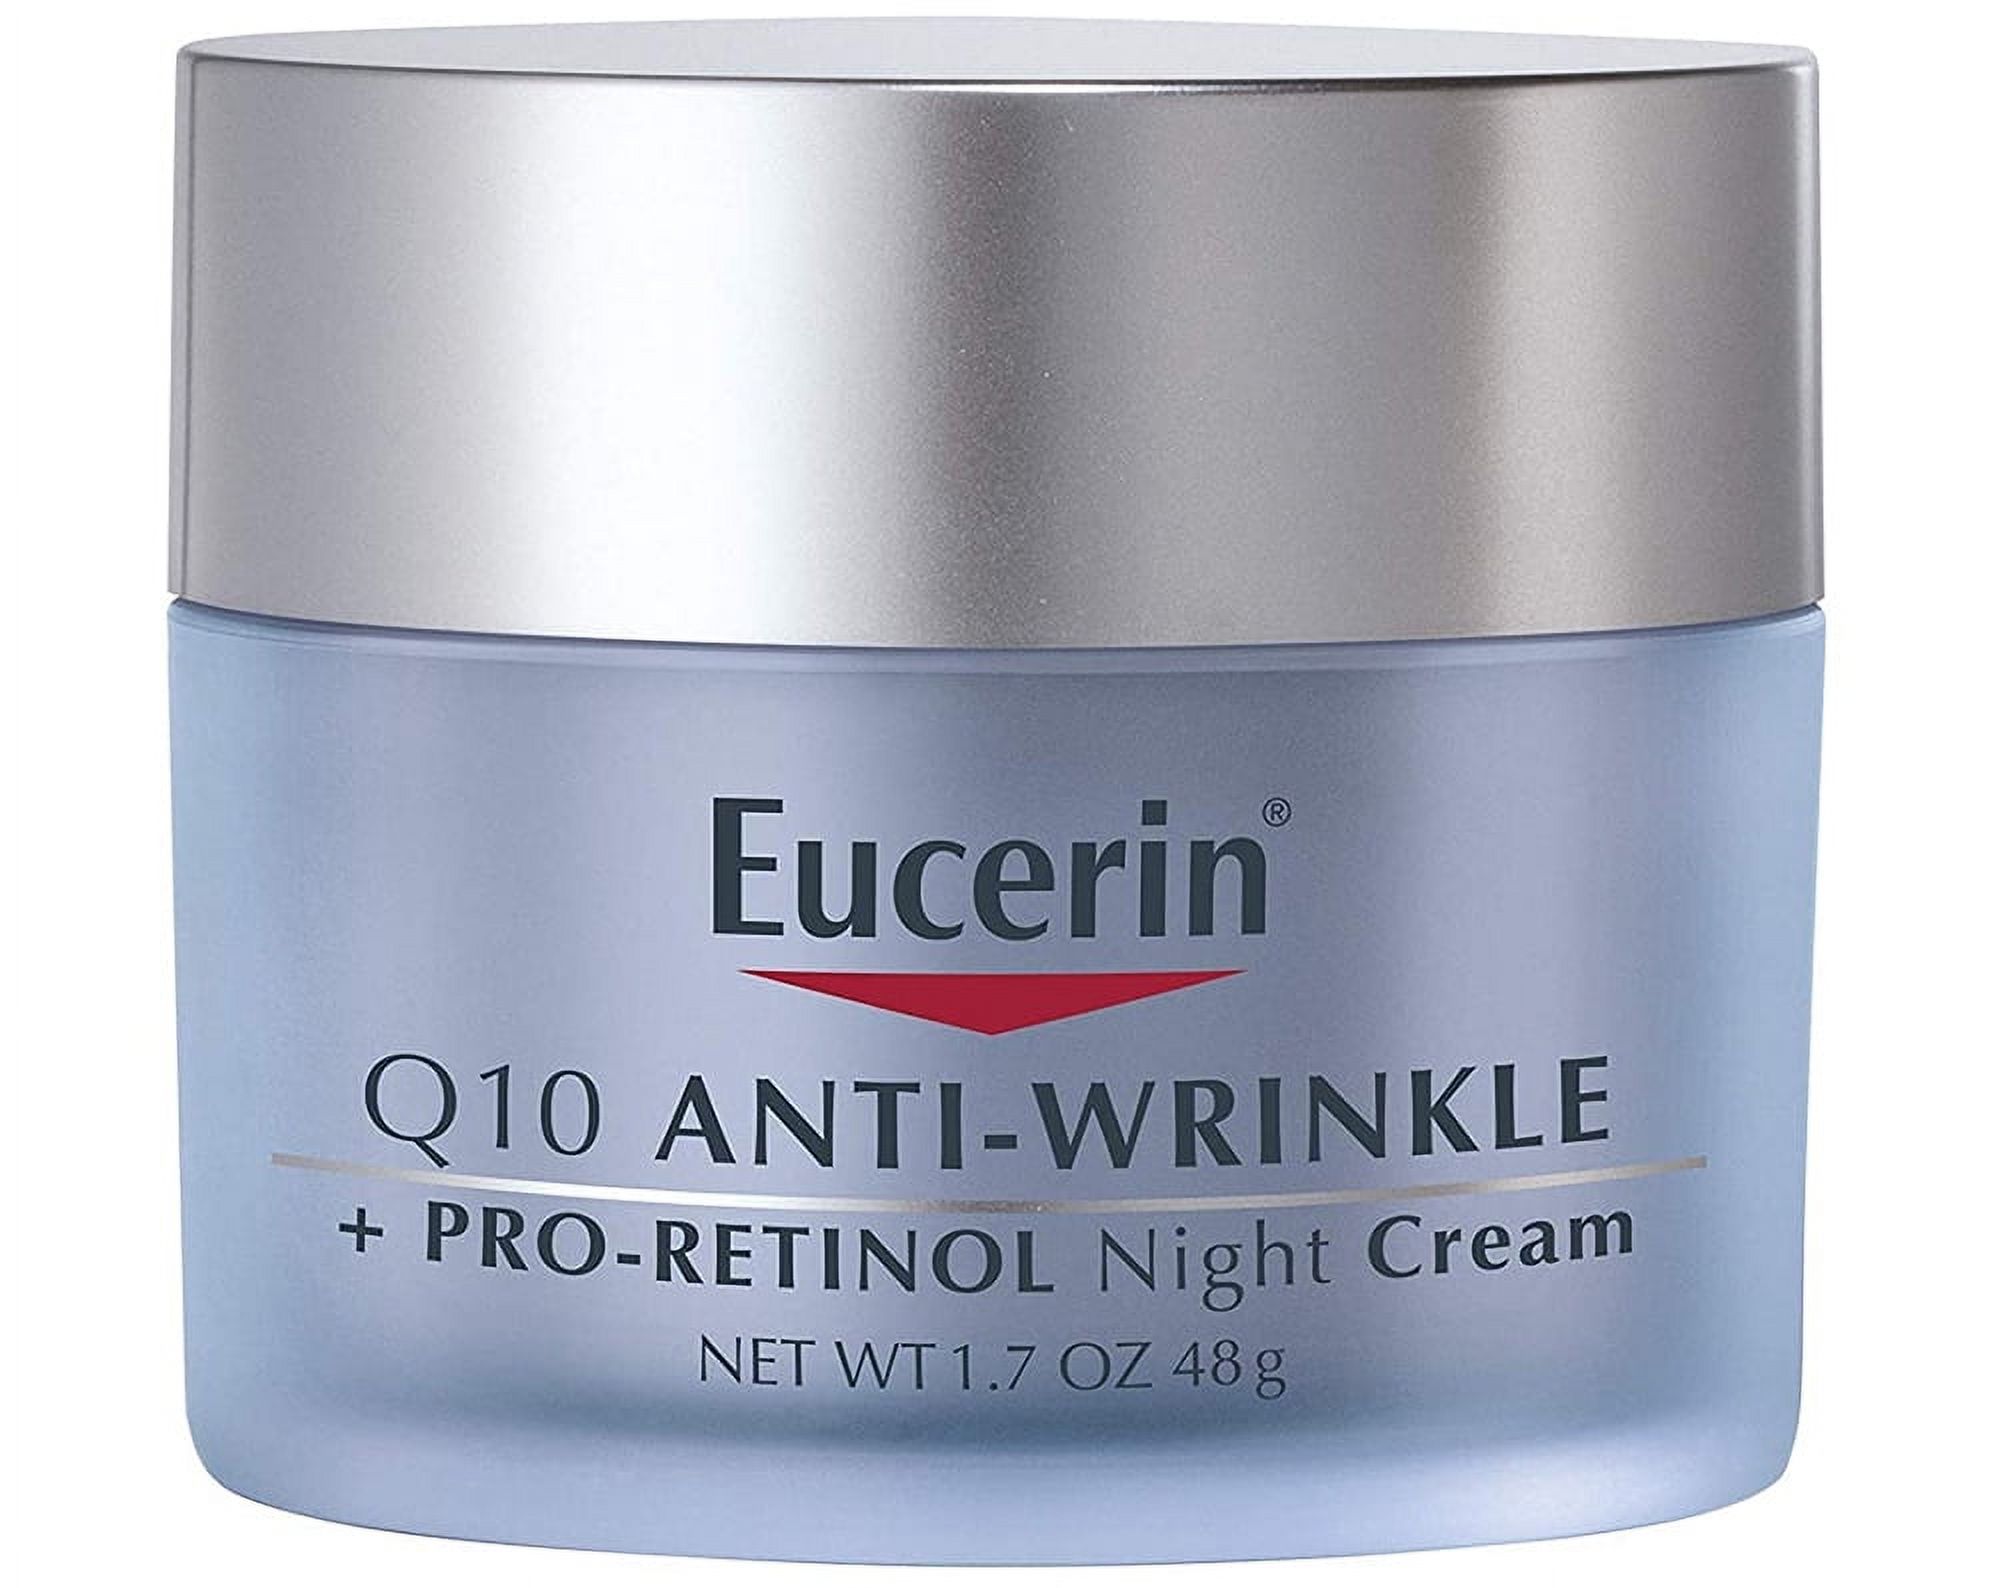 Eucerin Q10 Anti-Wrinkle Night Cream + Pro-Retinol, Facial Cream for Sensitive Skin, 1.7 Oz Jar - image 3 of 4